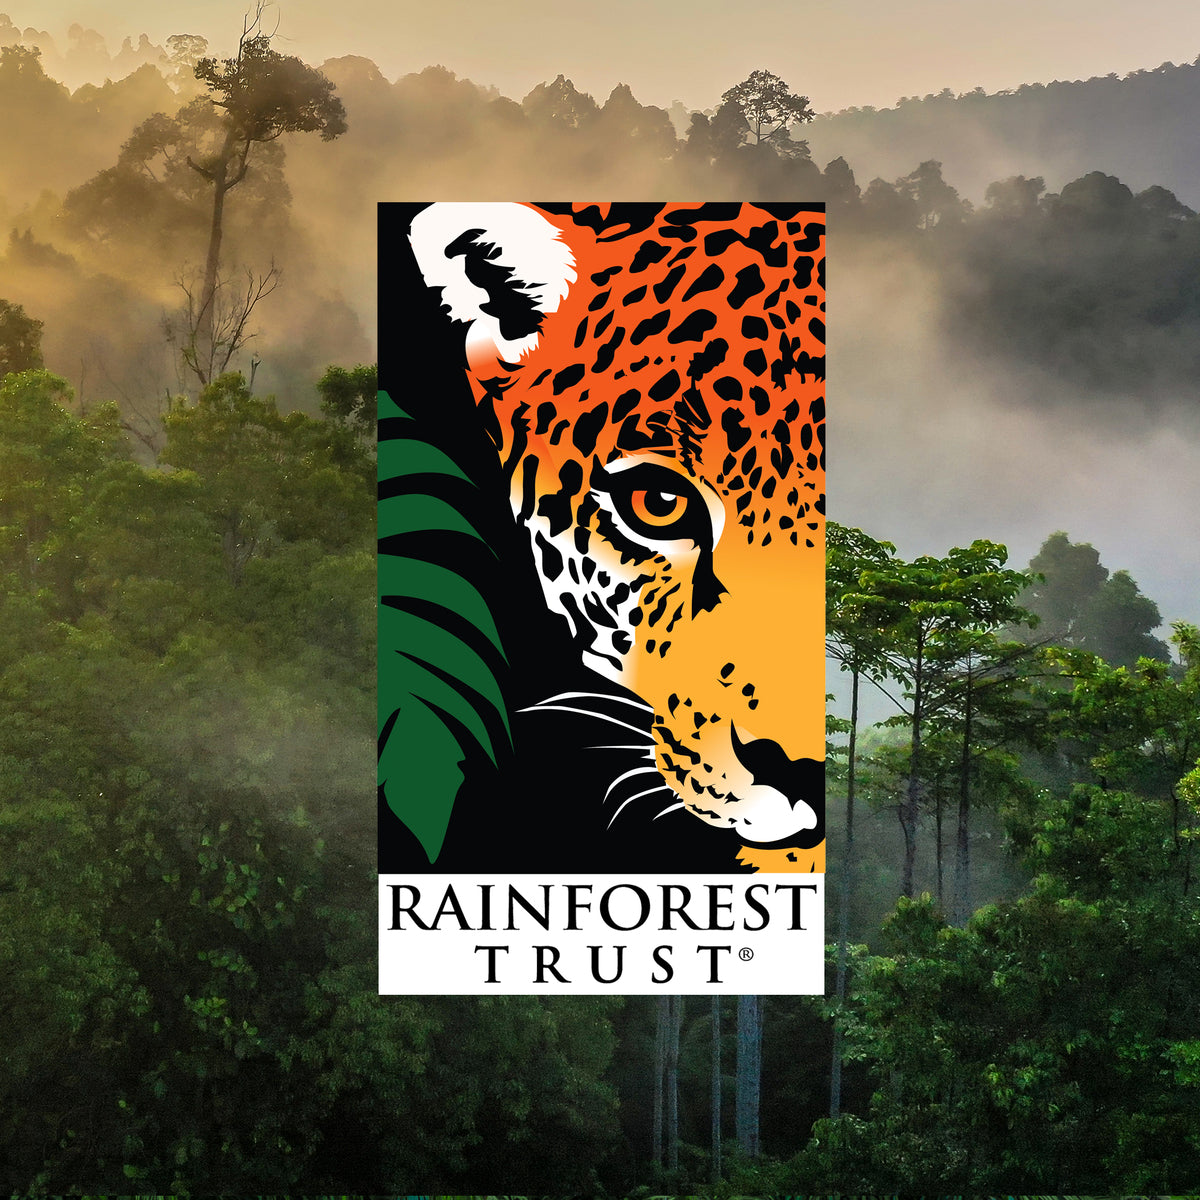 Logo of the rainforest trust